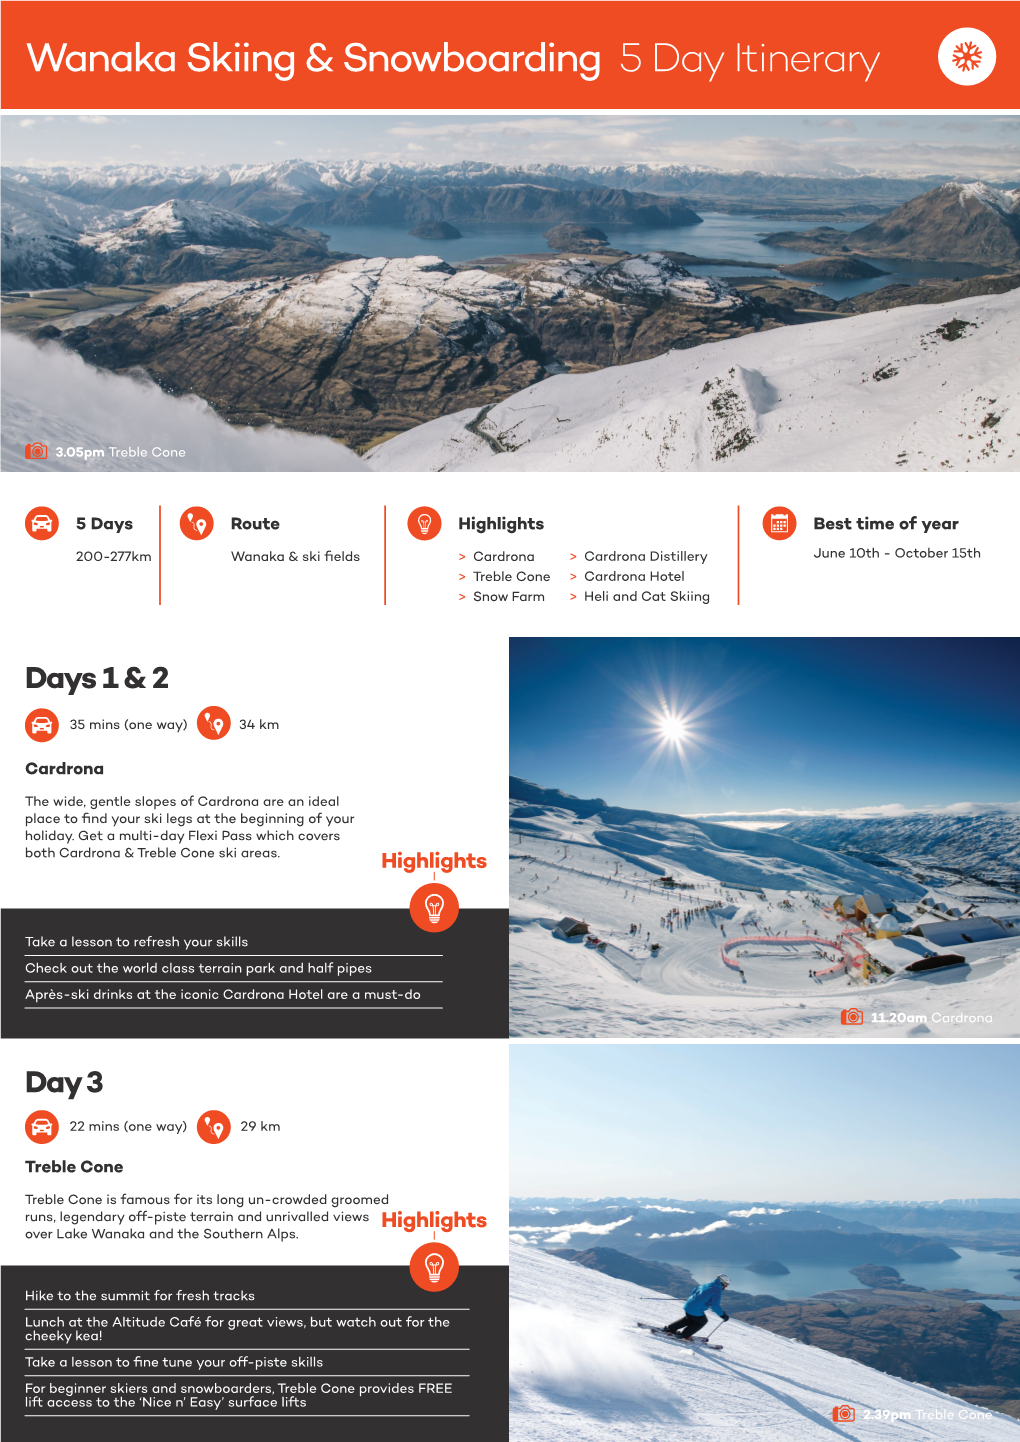 Wanaka Skiing & Snowboarding 5 Day Itinerary